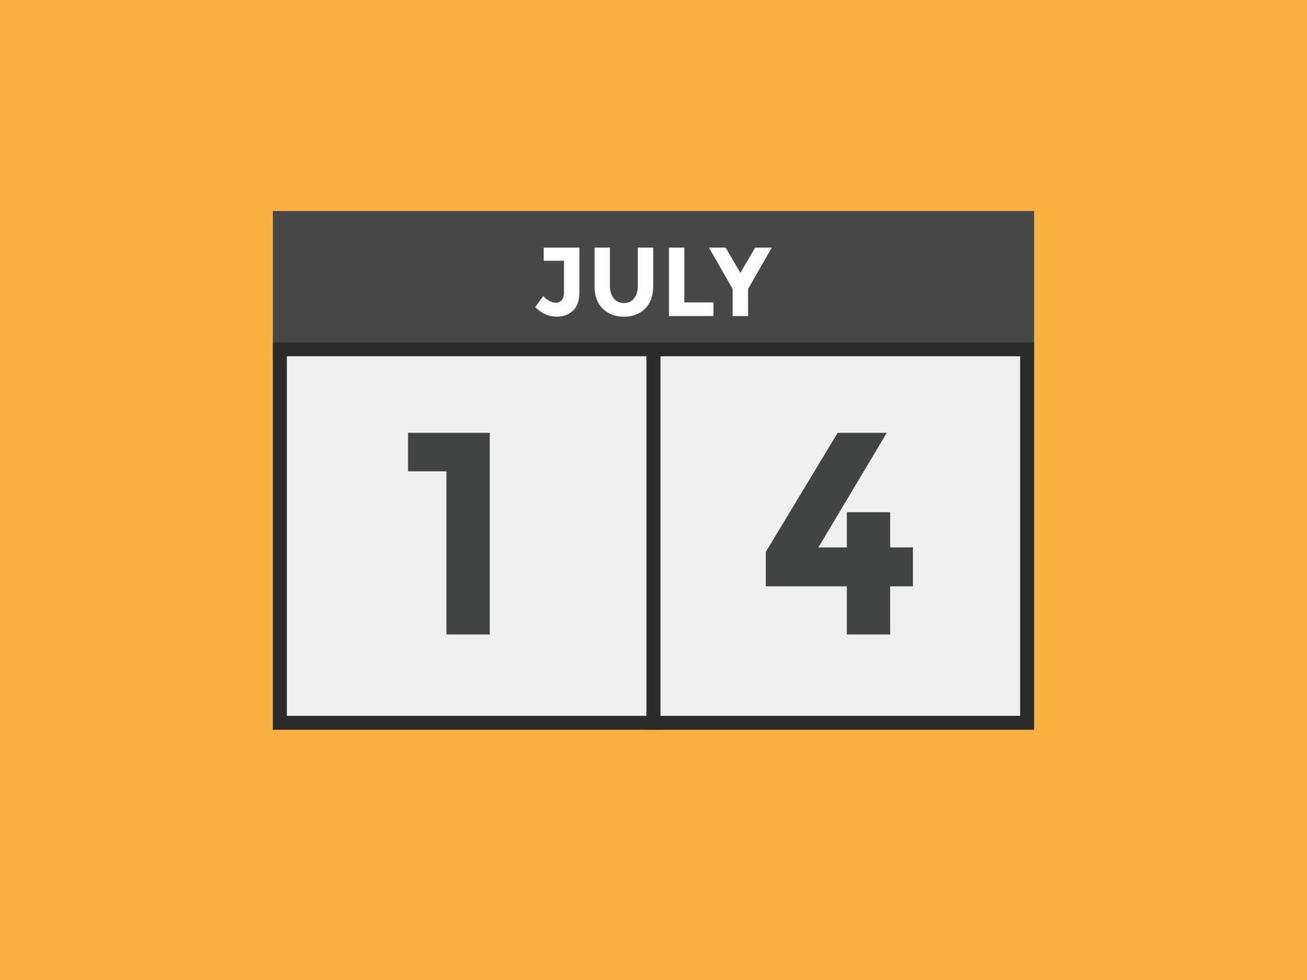 juli 14 kalender påminnelse. 14:e juli dagligen kalender ikon mall. kalender 14:e juli ikon design mall. vektor illustration